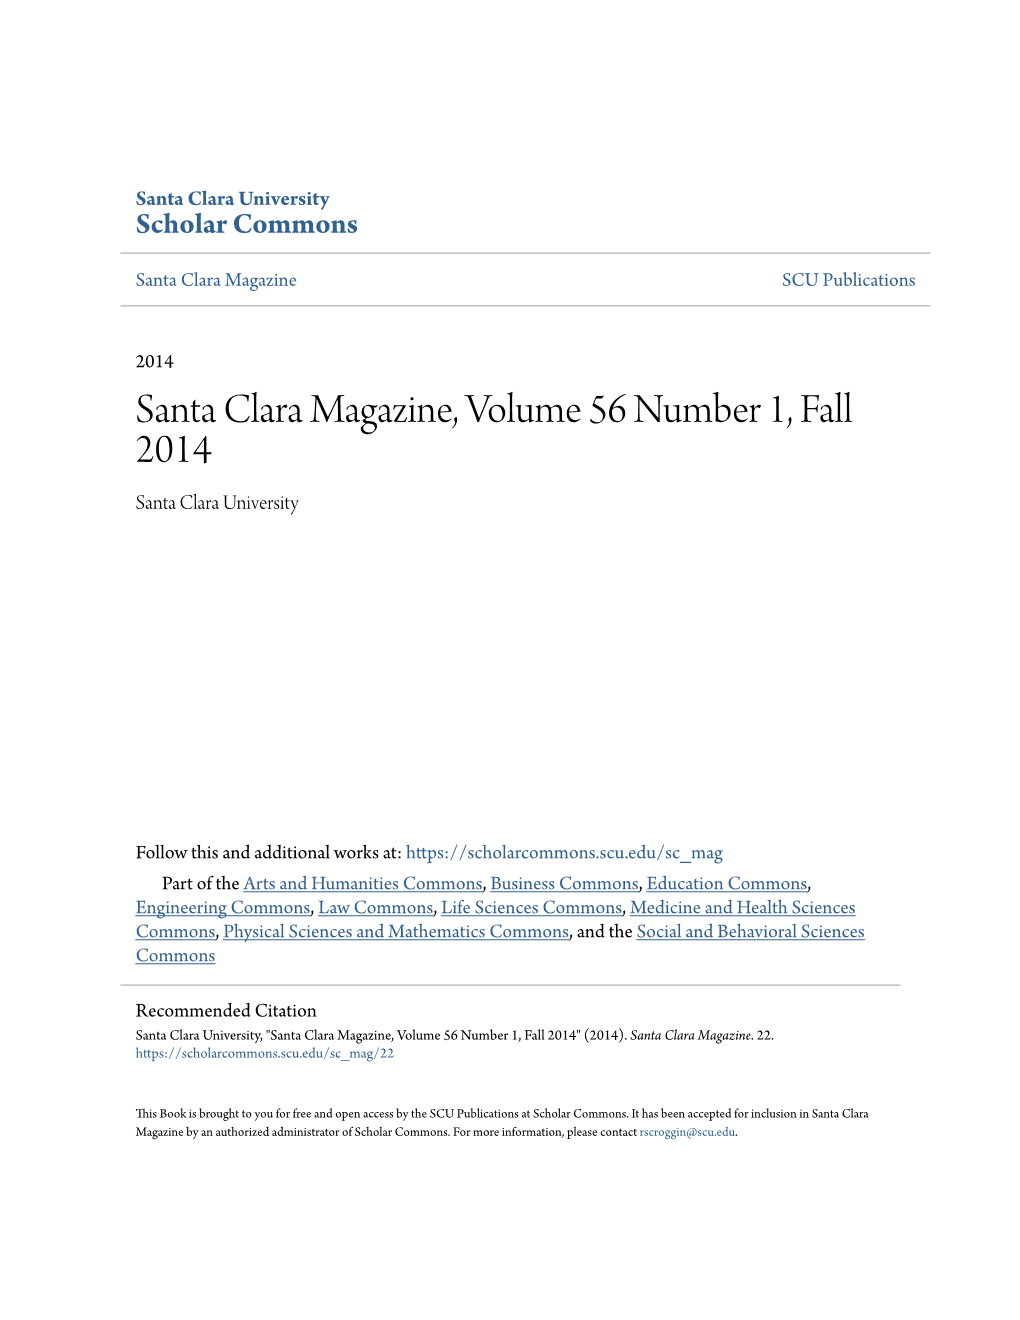 Santa Clara Magazine, Volume 56 Number 1, Fall 2014 Santa Clara University